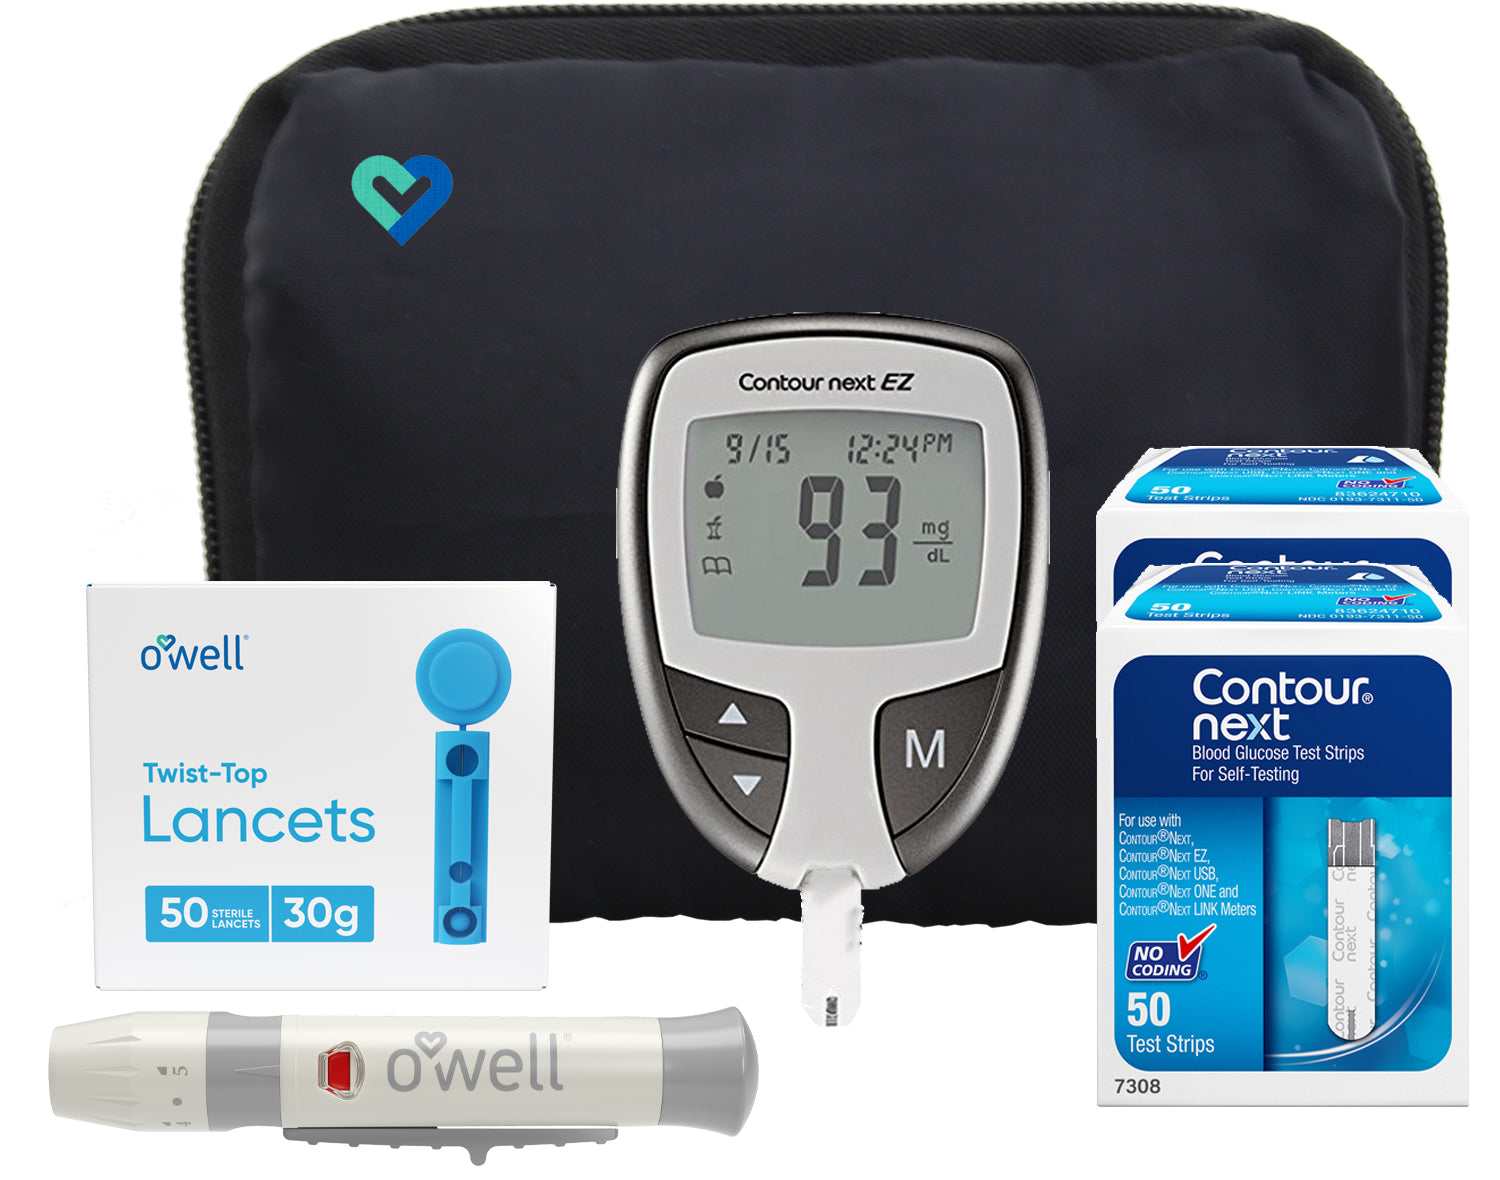 Contour NEXT EZ Diabetes Testing Kit | Starter Kit + Test Strips & Lancets